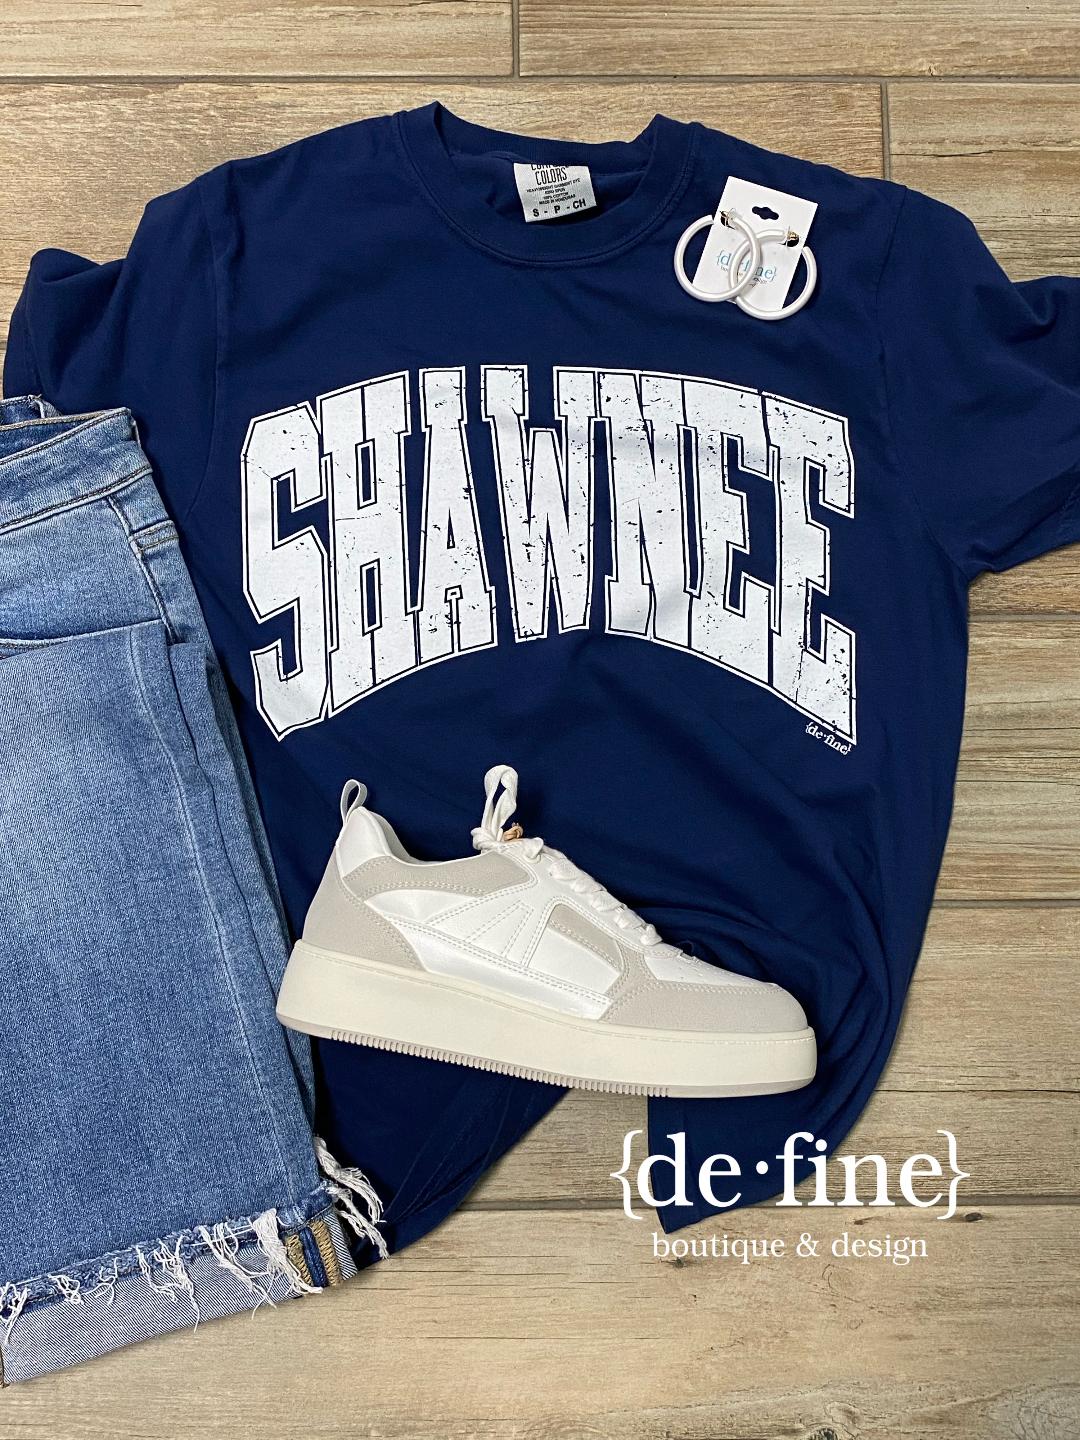 Shawnee Collegiate Style Graphic Tee or Sweatshirt